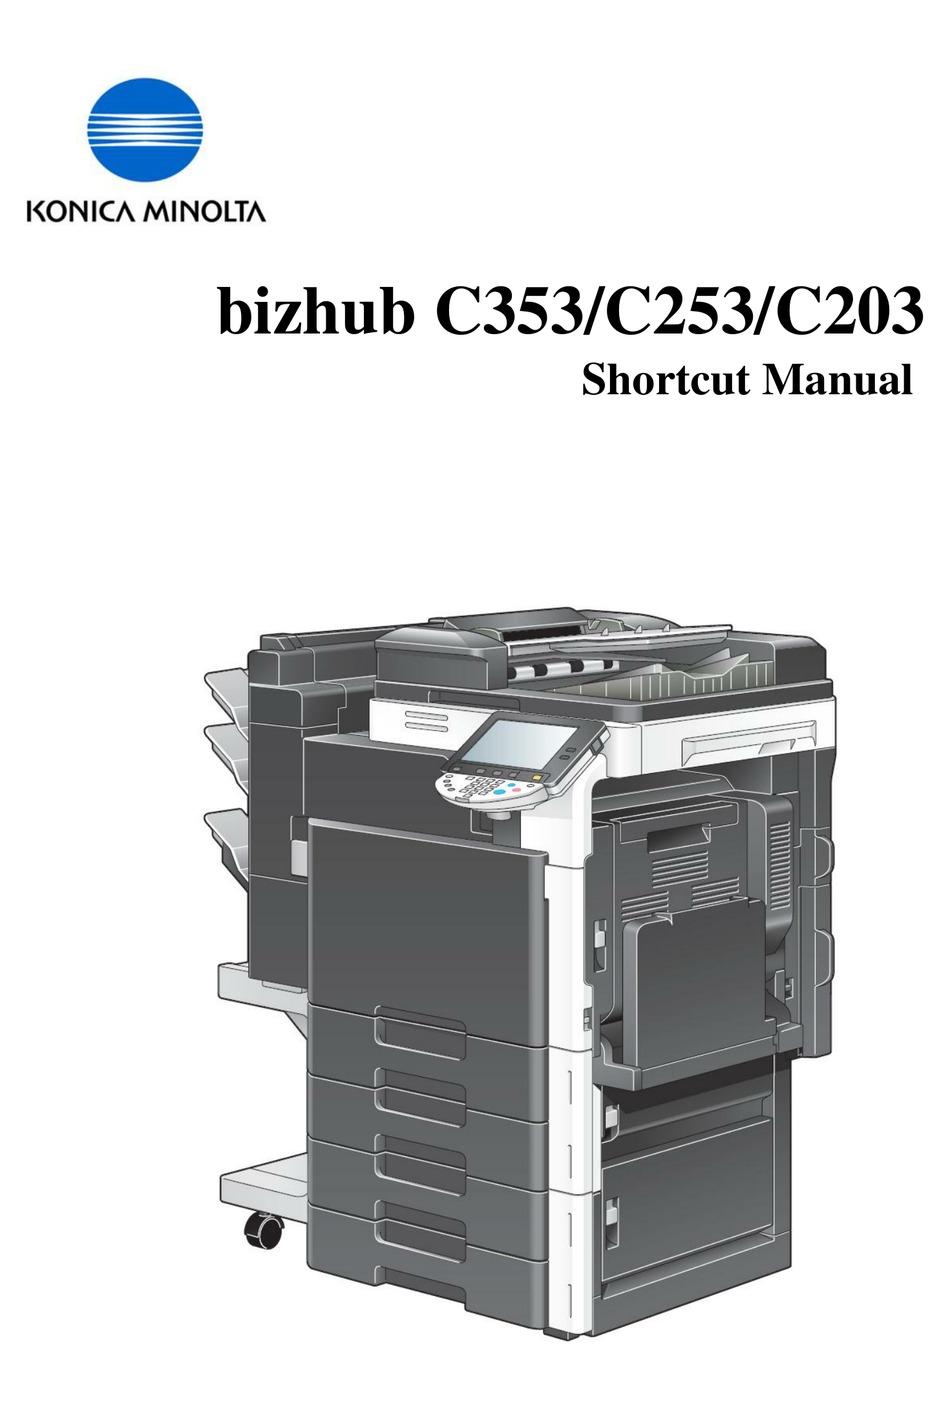 KONICA MINOLTA BIZHUB C353 SHORTCUT MANUAL Pdf Download | ManualsLib